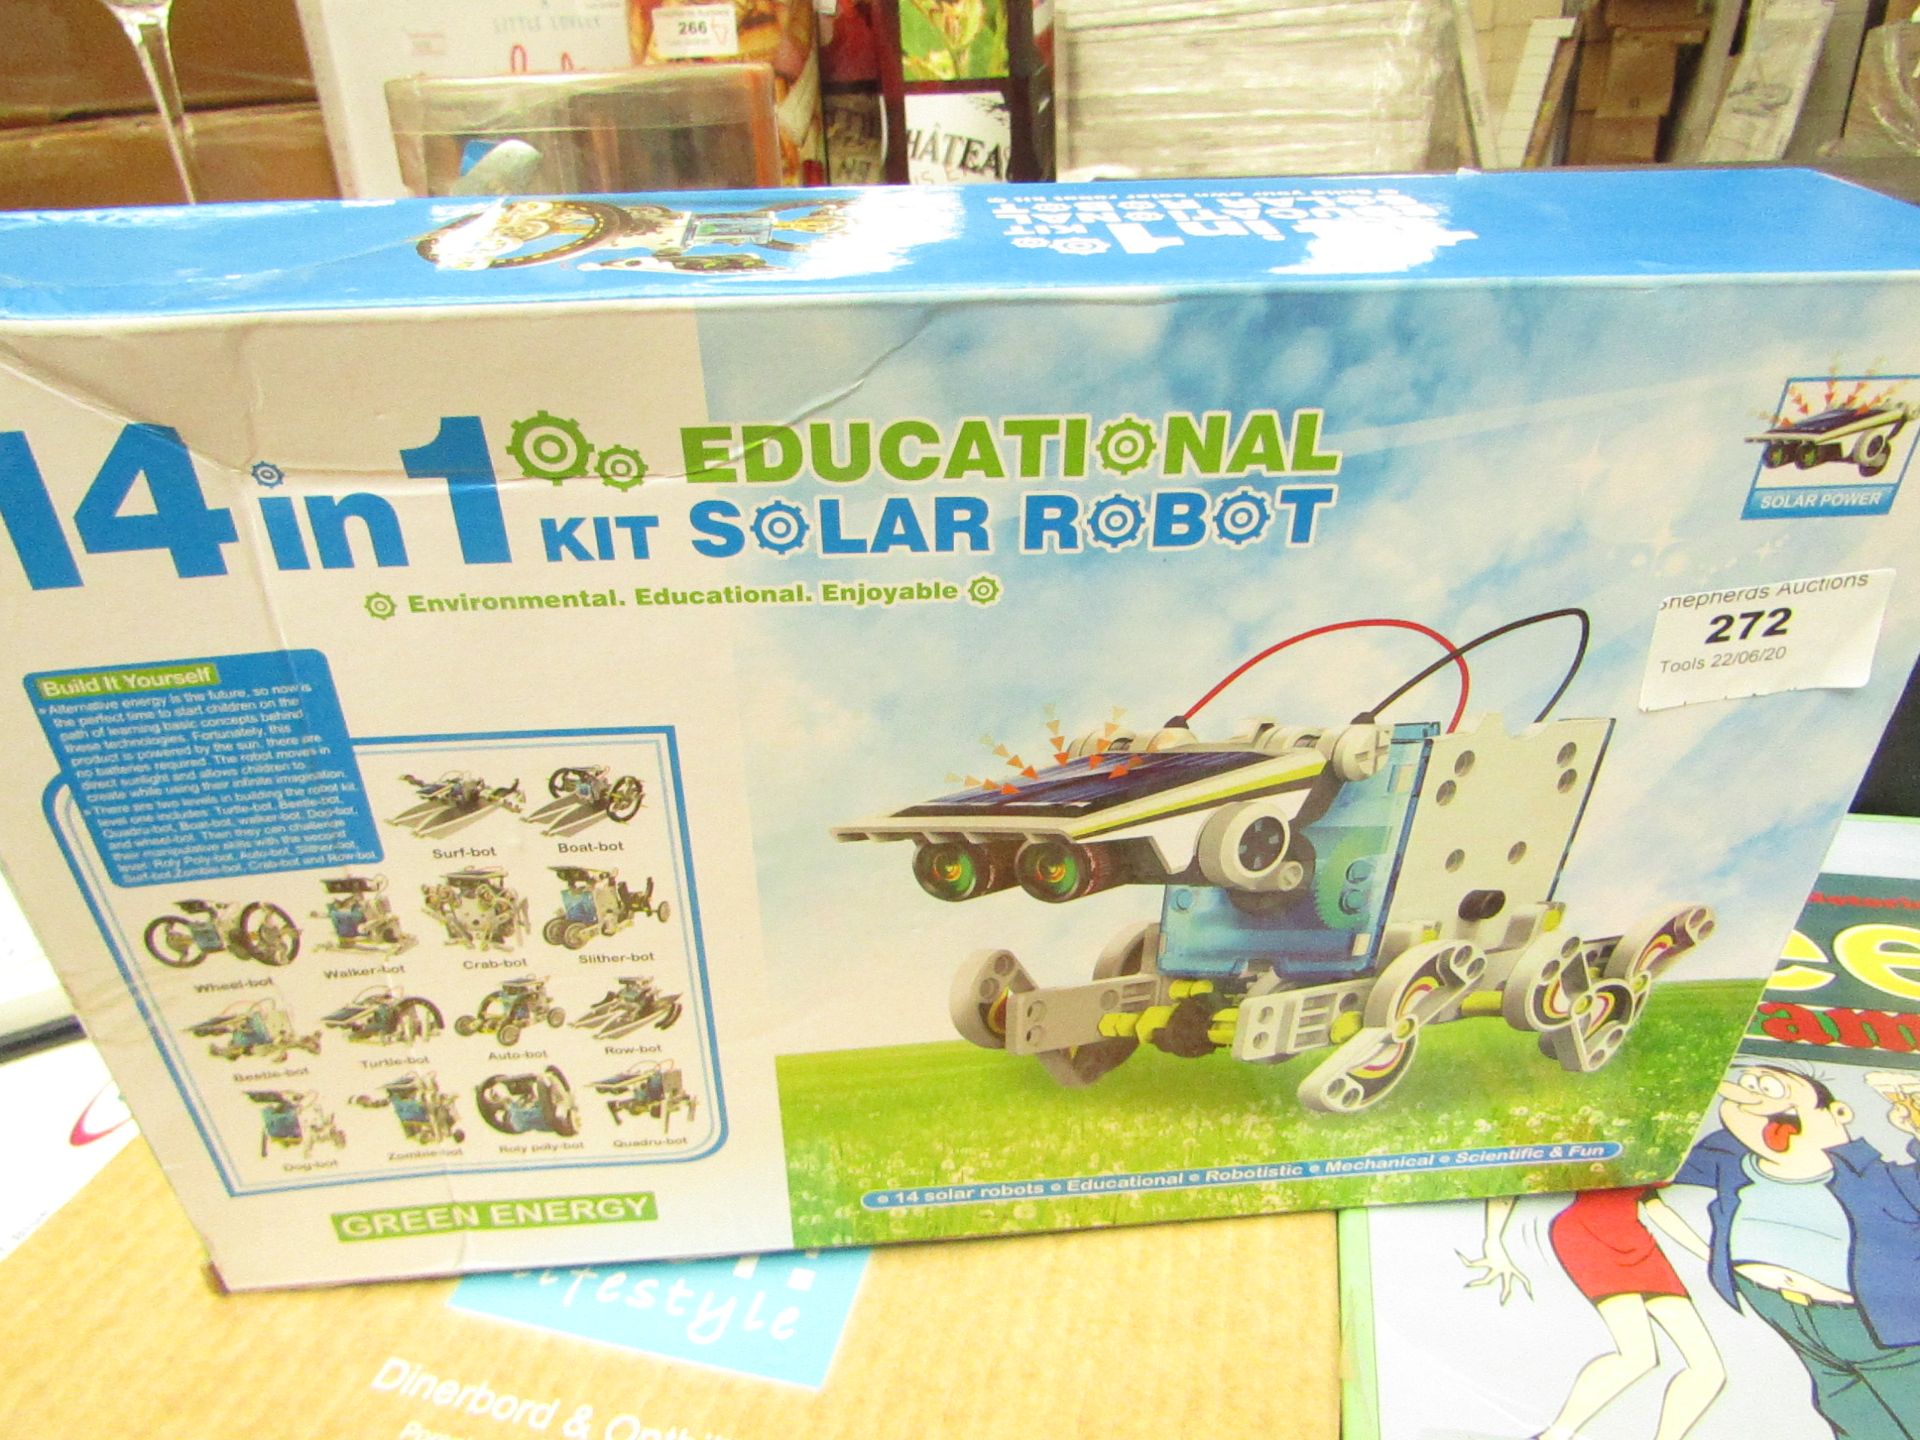 14 in 1 Educational Solar robot kit. Boxed